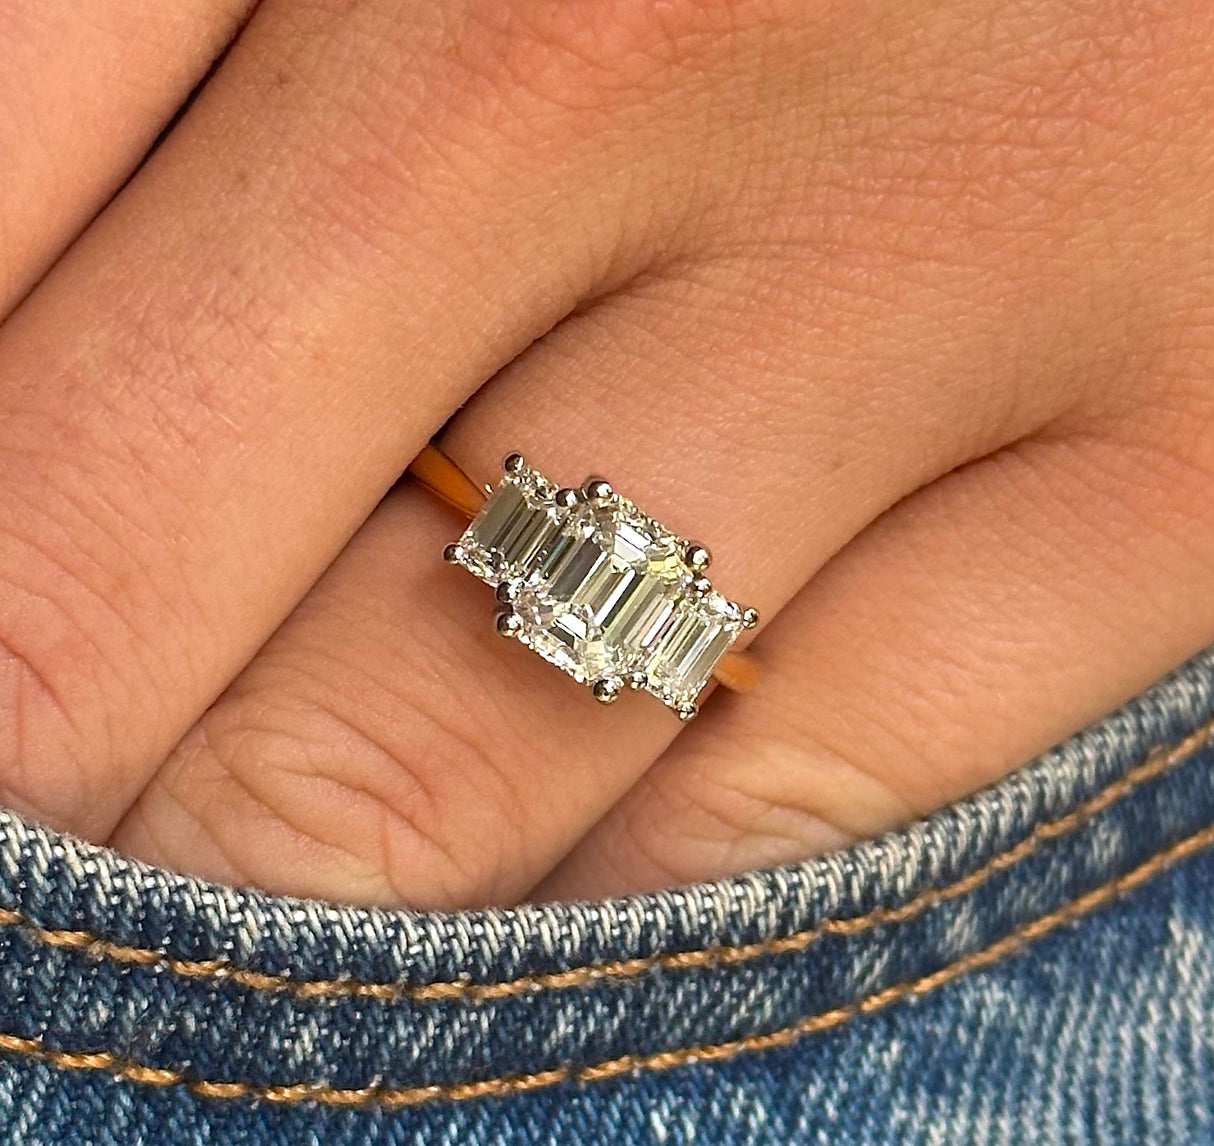 Three stone emerald-cut diamond ring, worn on middle finger photographed on hand inside denim jean pocket